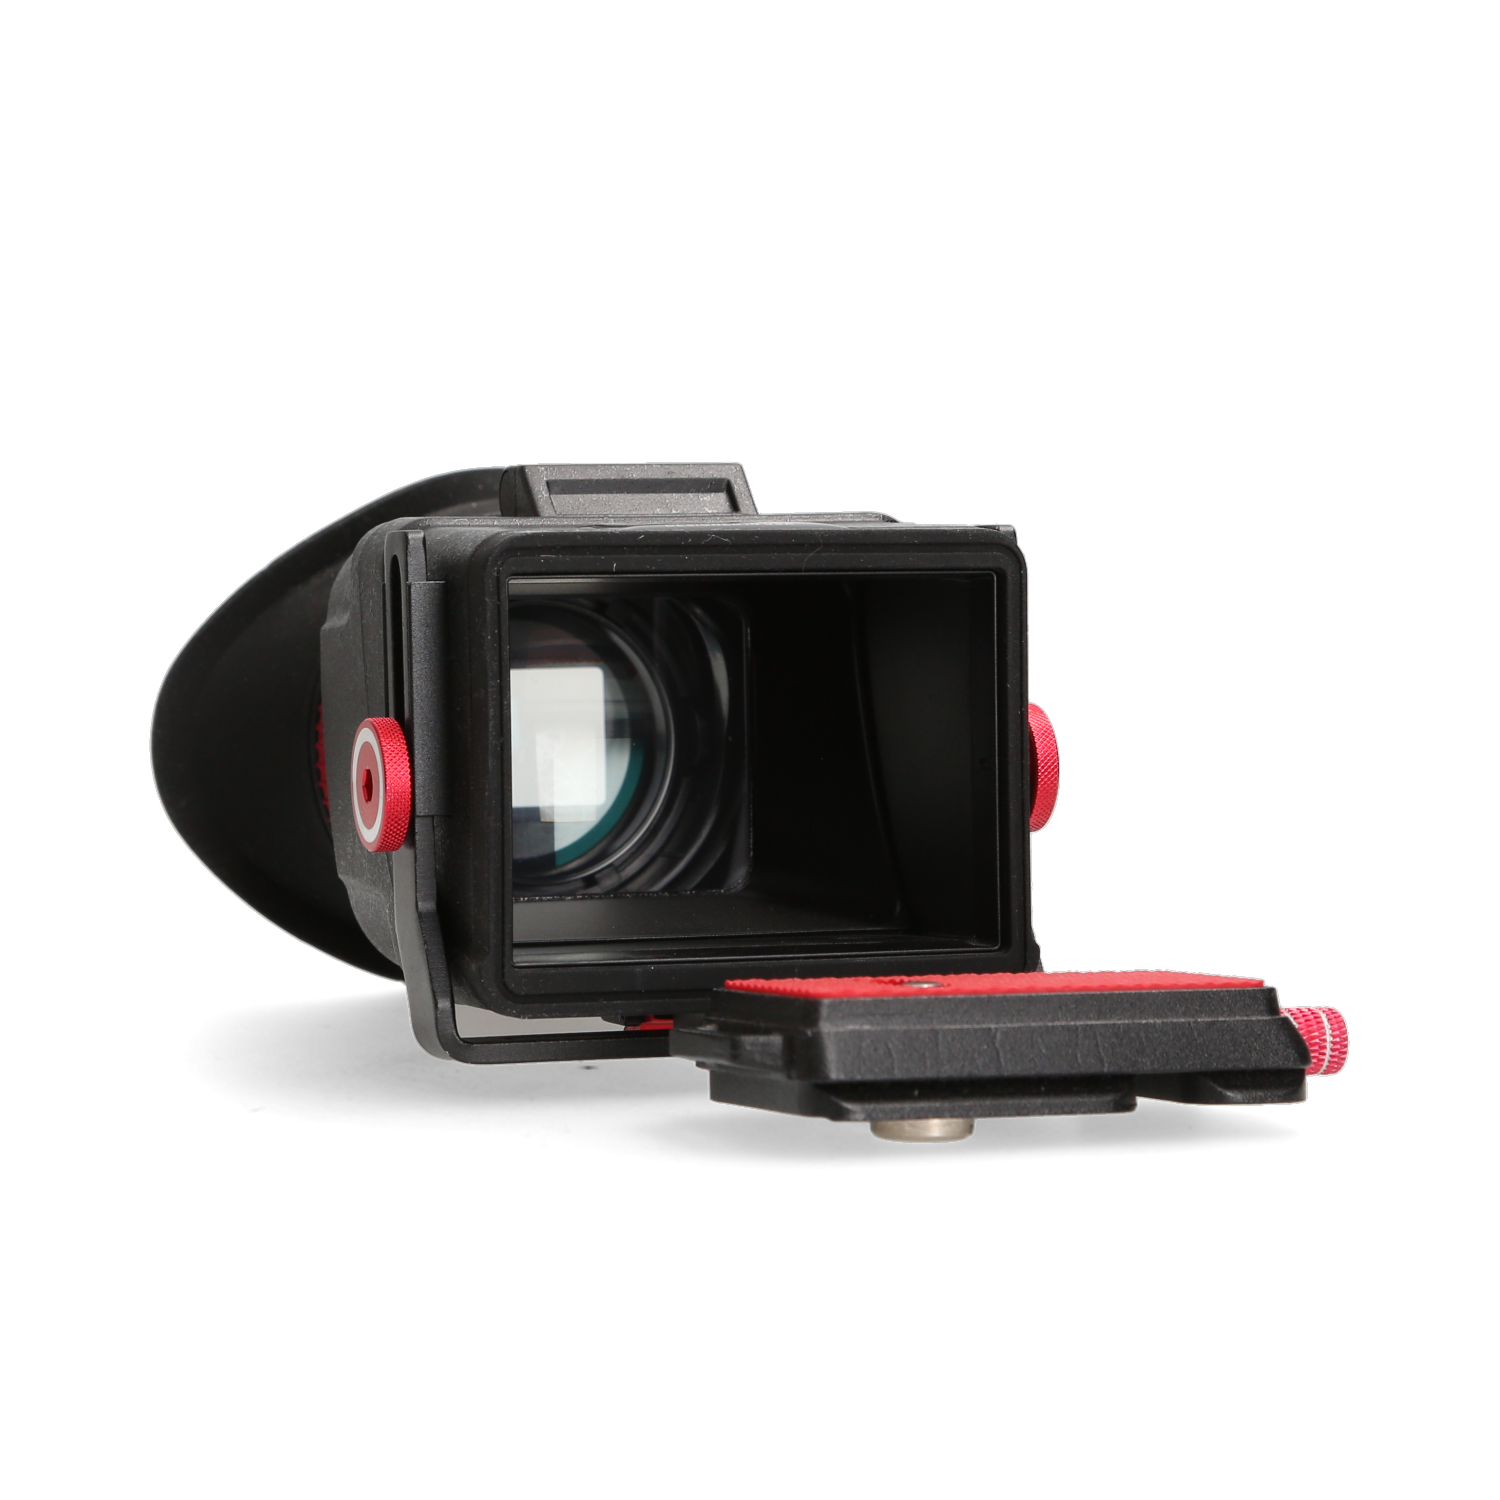 VF4 VF4 Carryspeed LCD Viewfinder voor Sony camera's